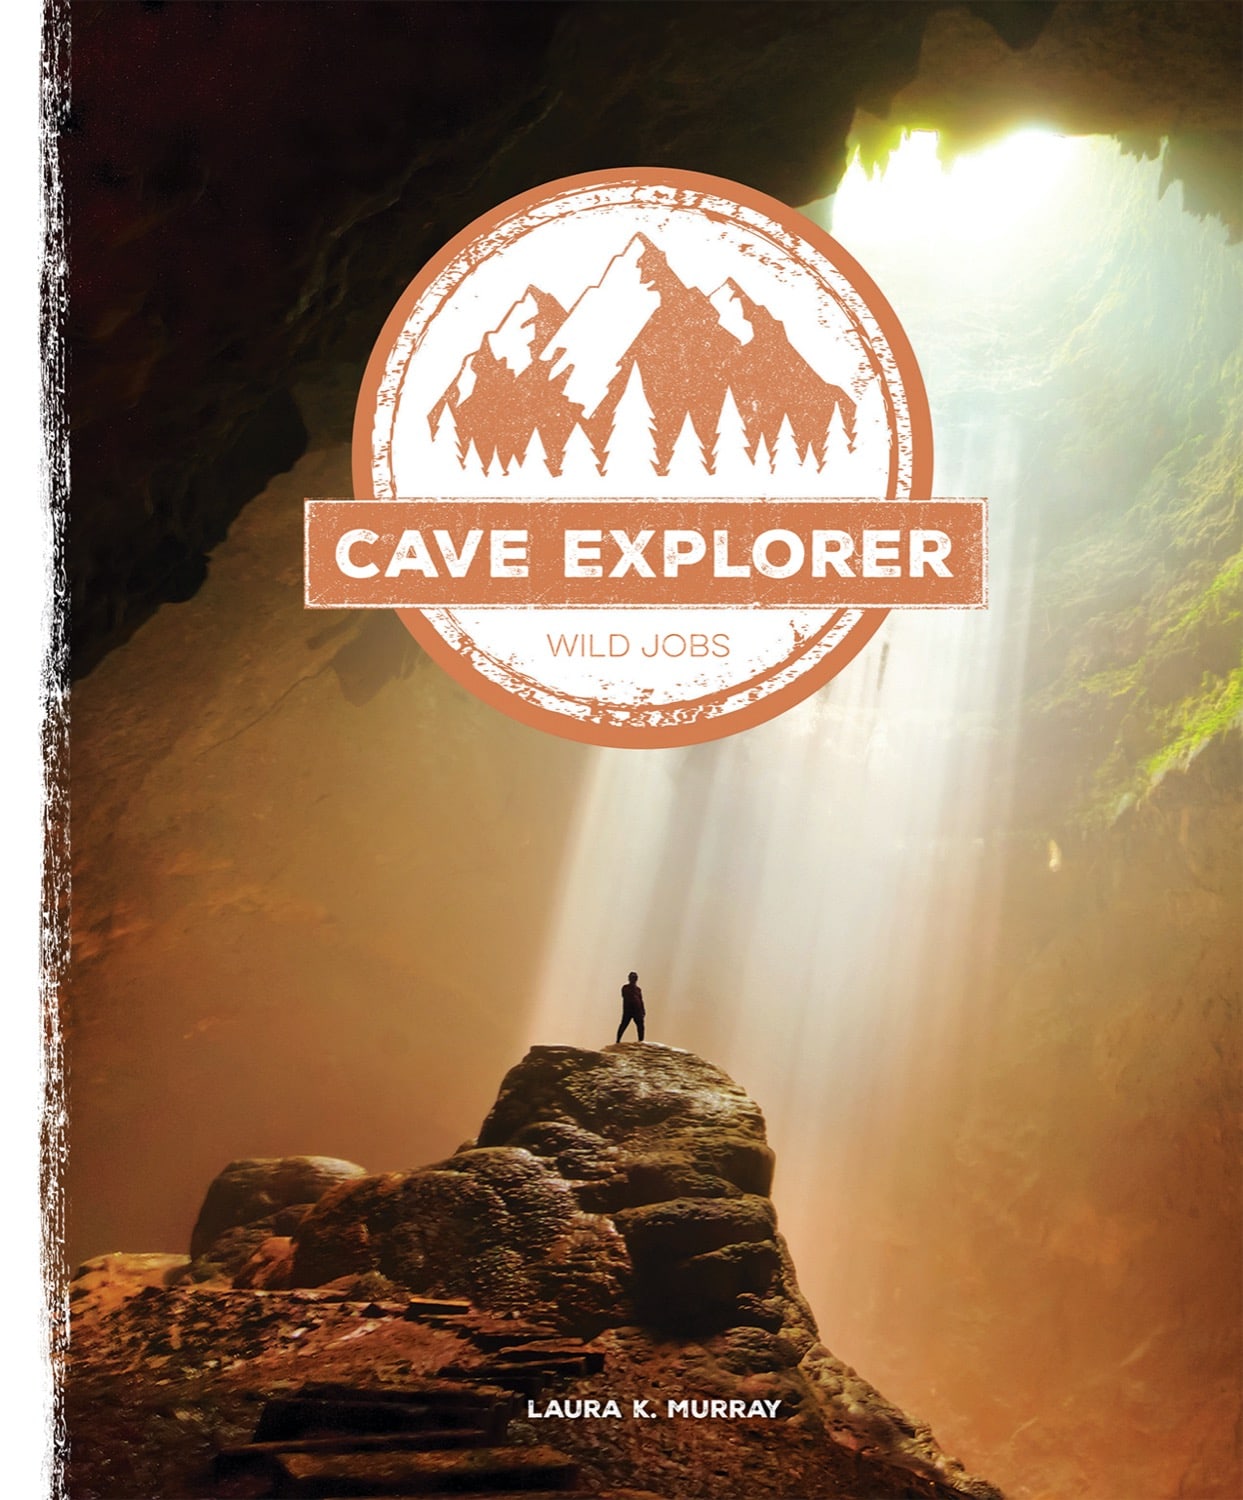 Wild Jobs: Cave Explorer